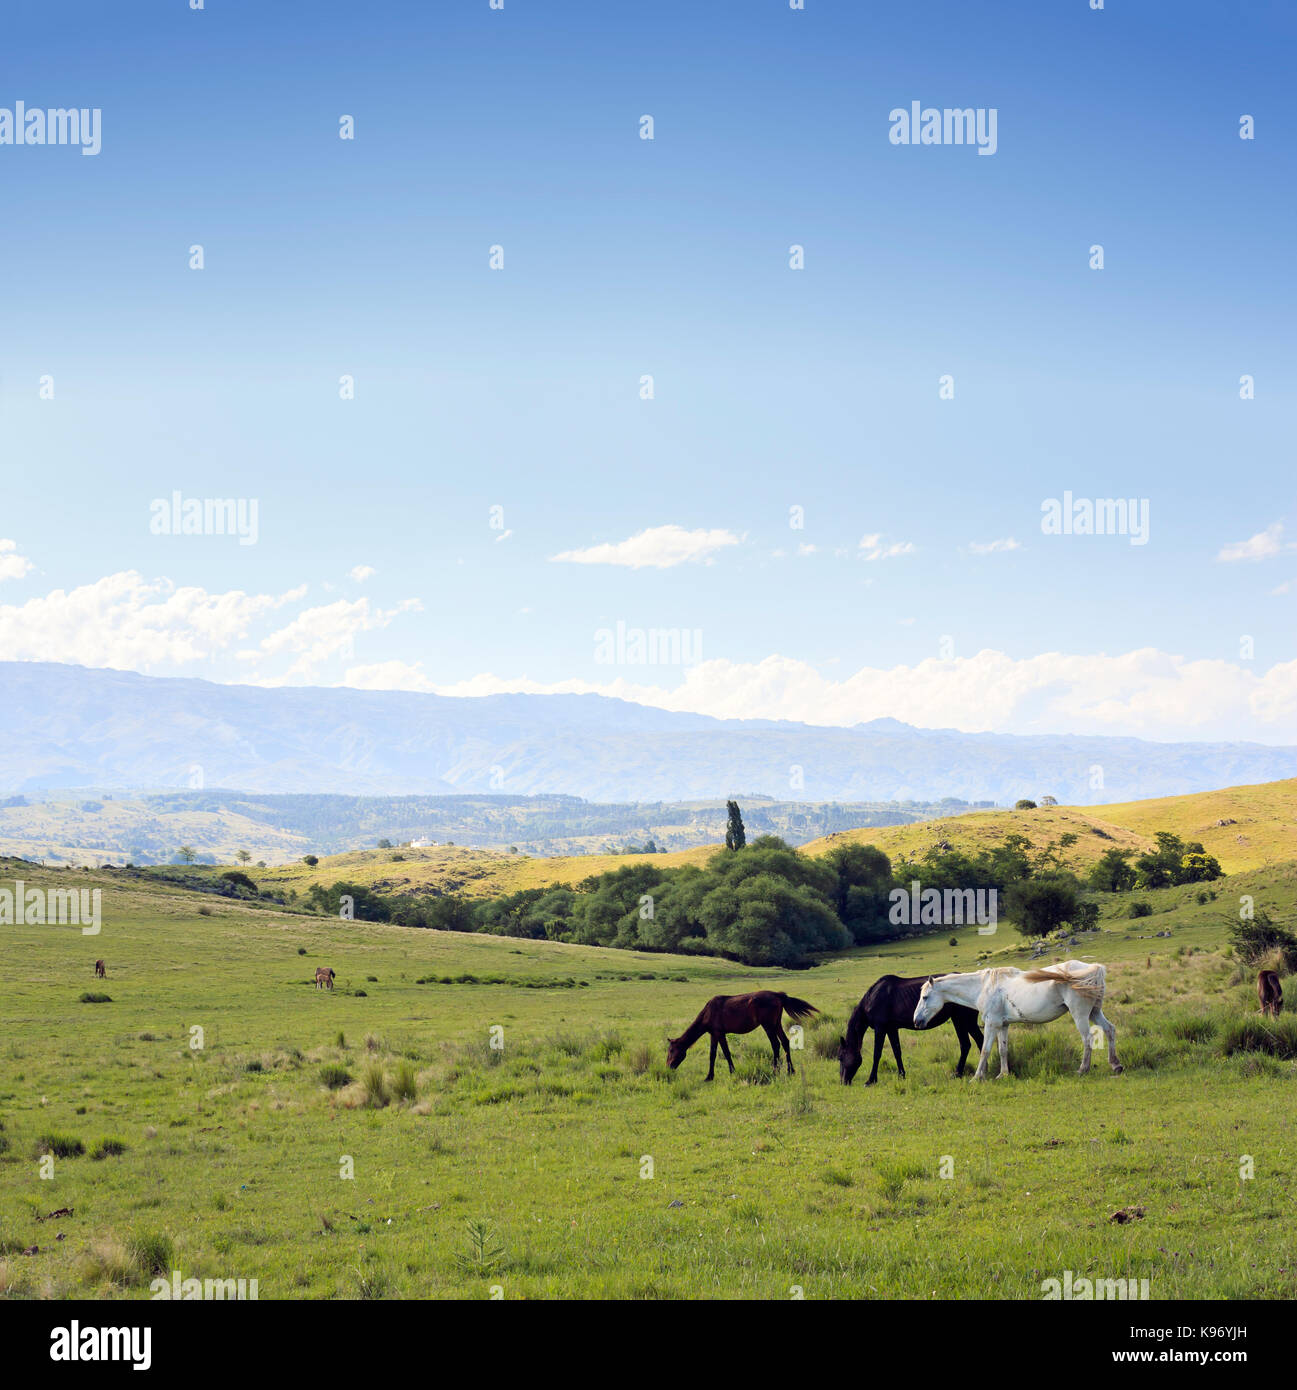 CORDOBA, ARGENTINA. Beautiful photograph taken in the sierras of Cordoba, Argentina. Valley of Calamuchita, near Villa Yacanto. Field with horses. Stock Photo